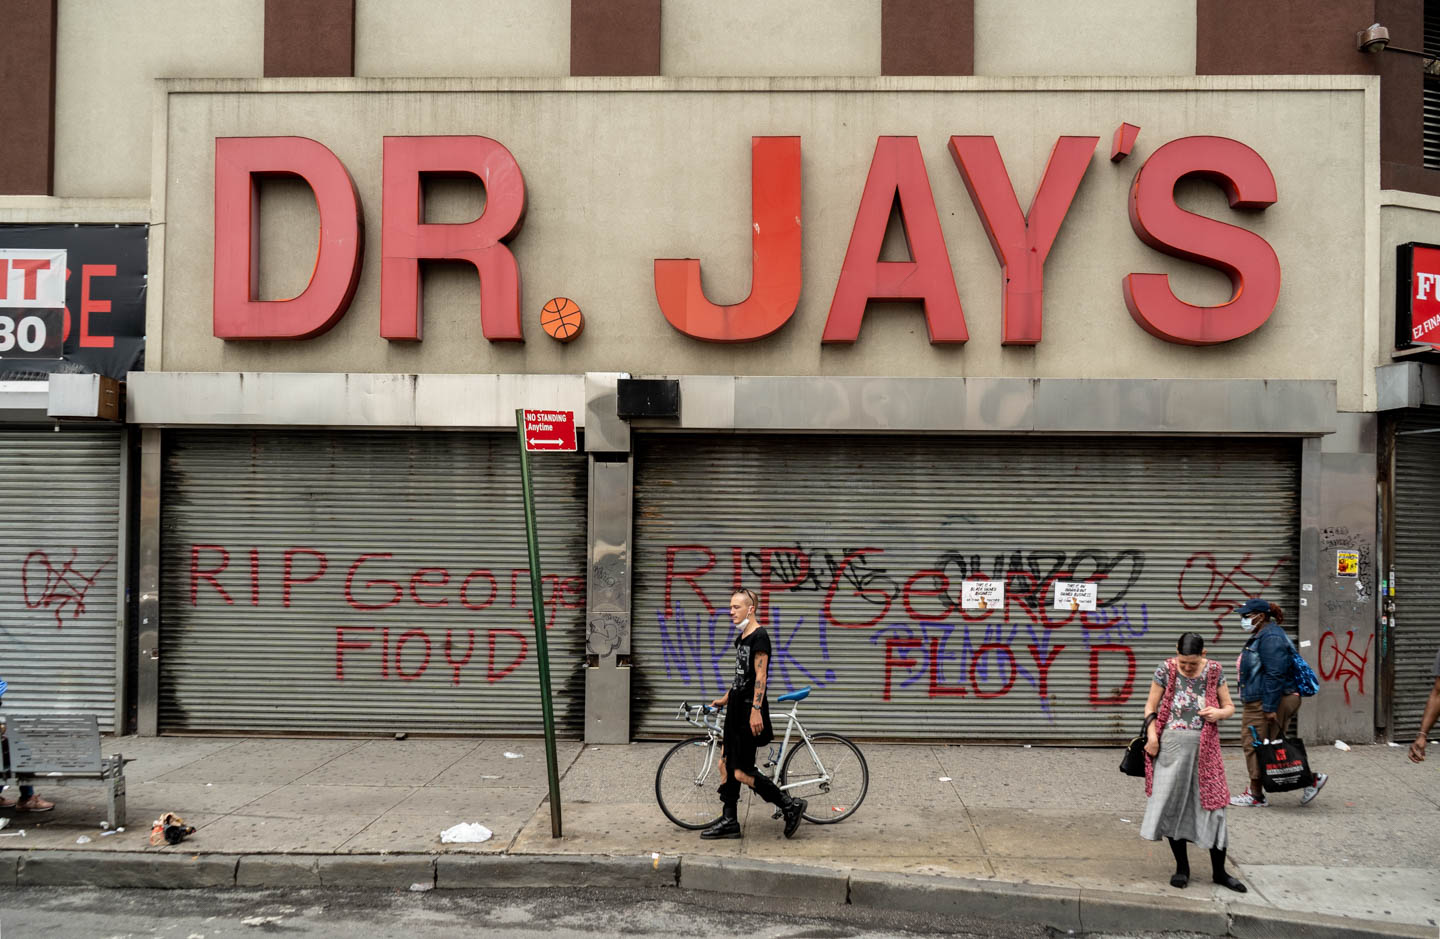 June 5, 2020: Graffiti memorializing George Floyd on closed shutters. Dr. Jay’s, 410 Westchester Avenue, Bronx, New York. © Camilo José Vergara